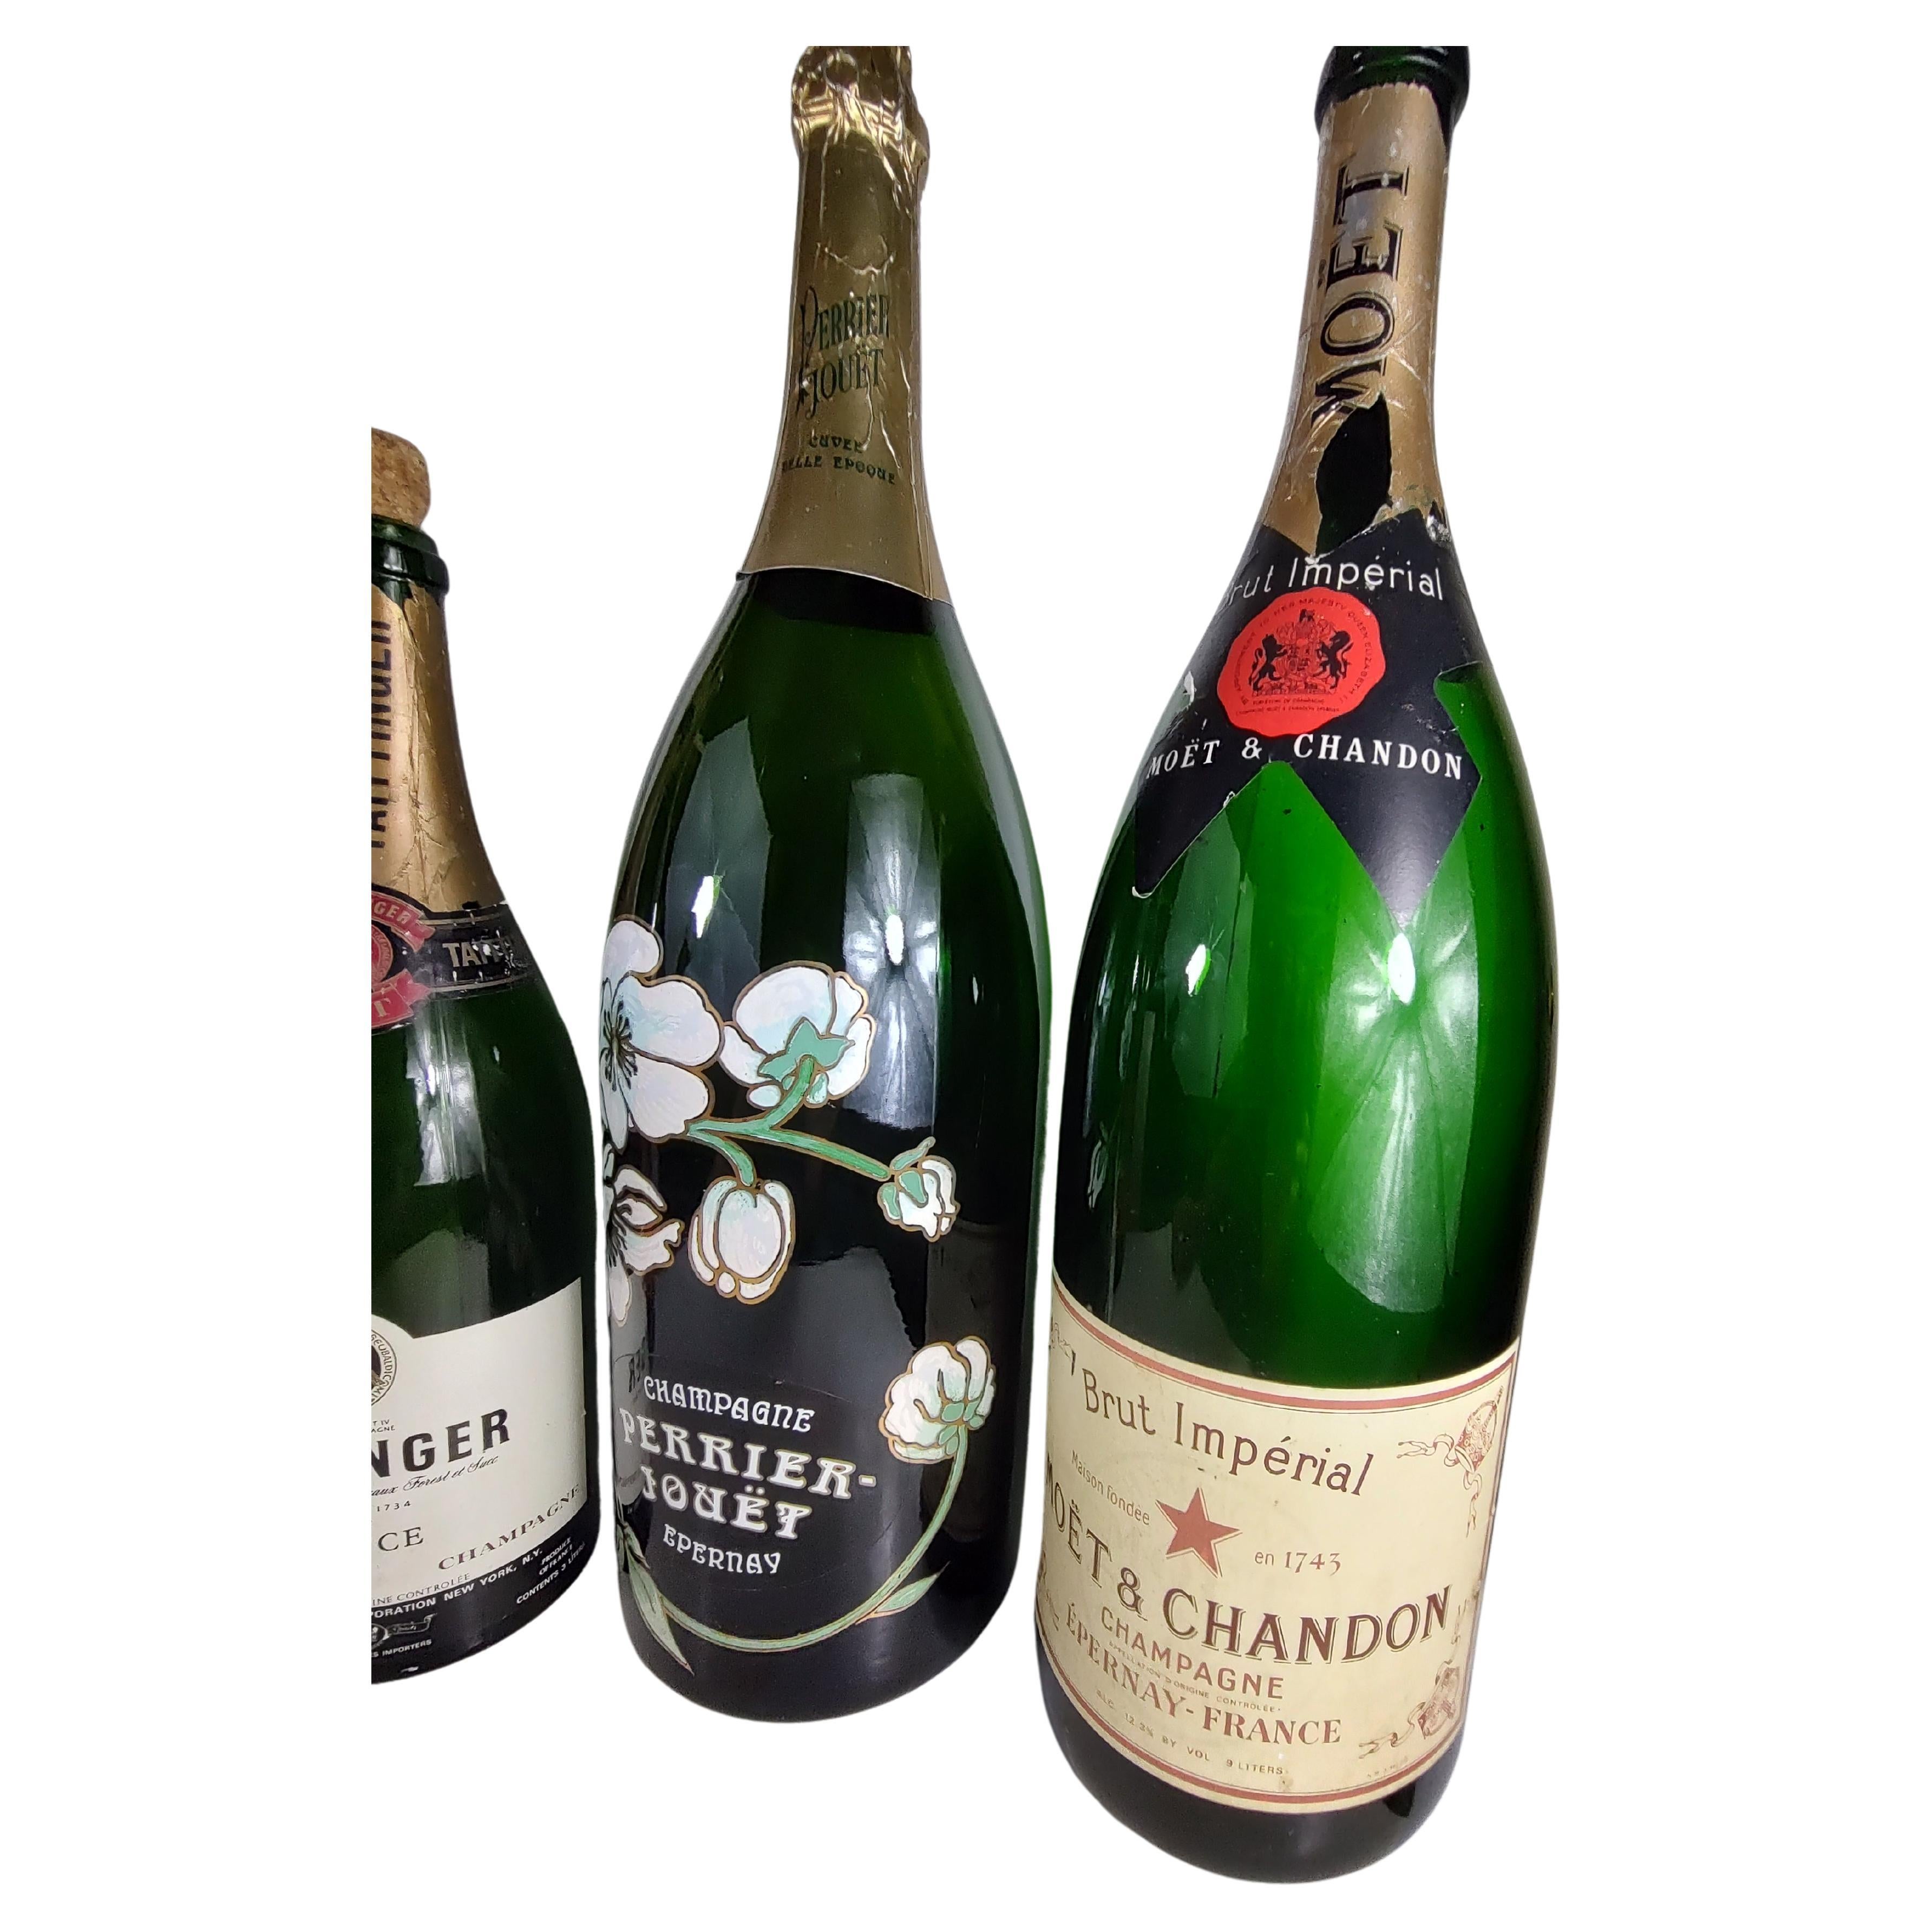 display champagne bottles